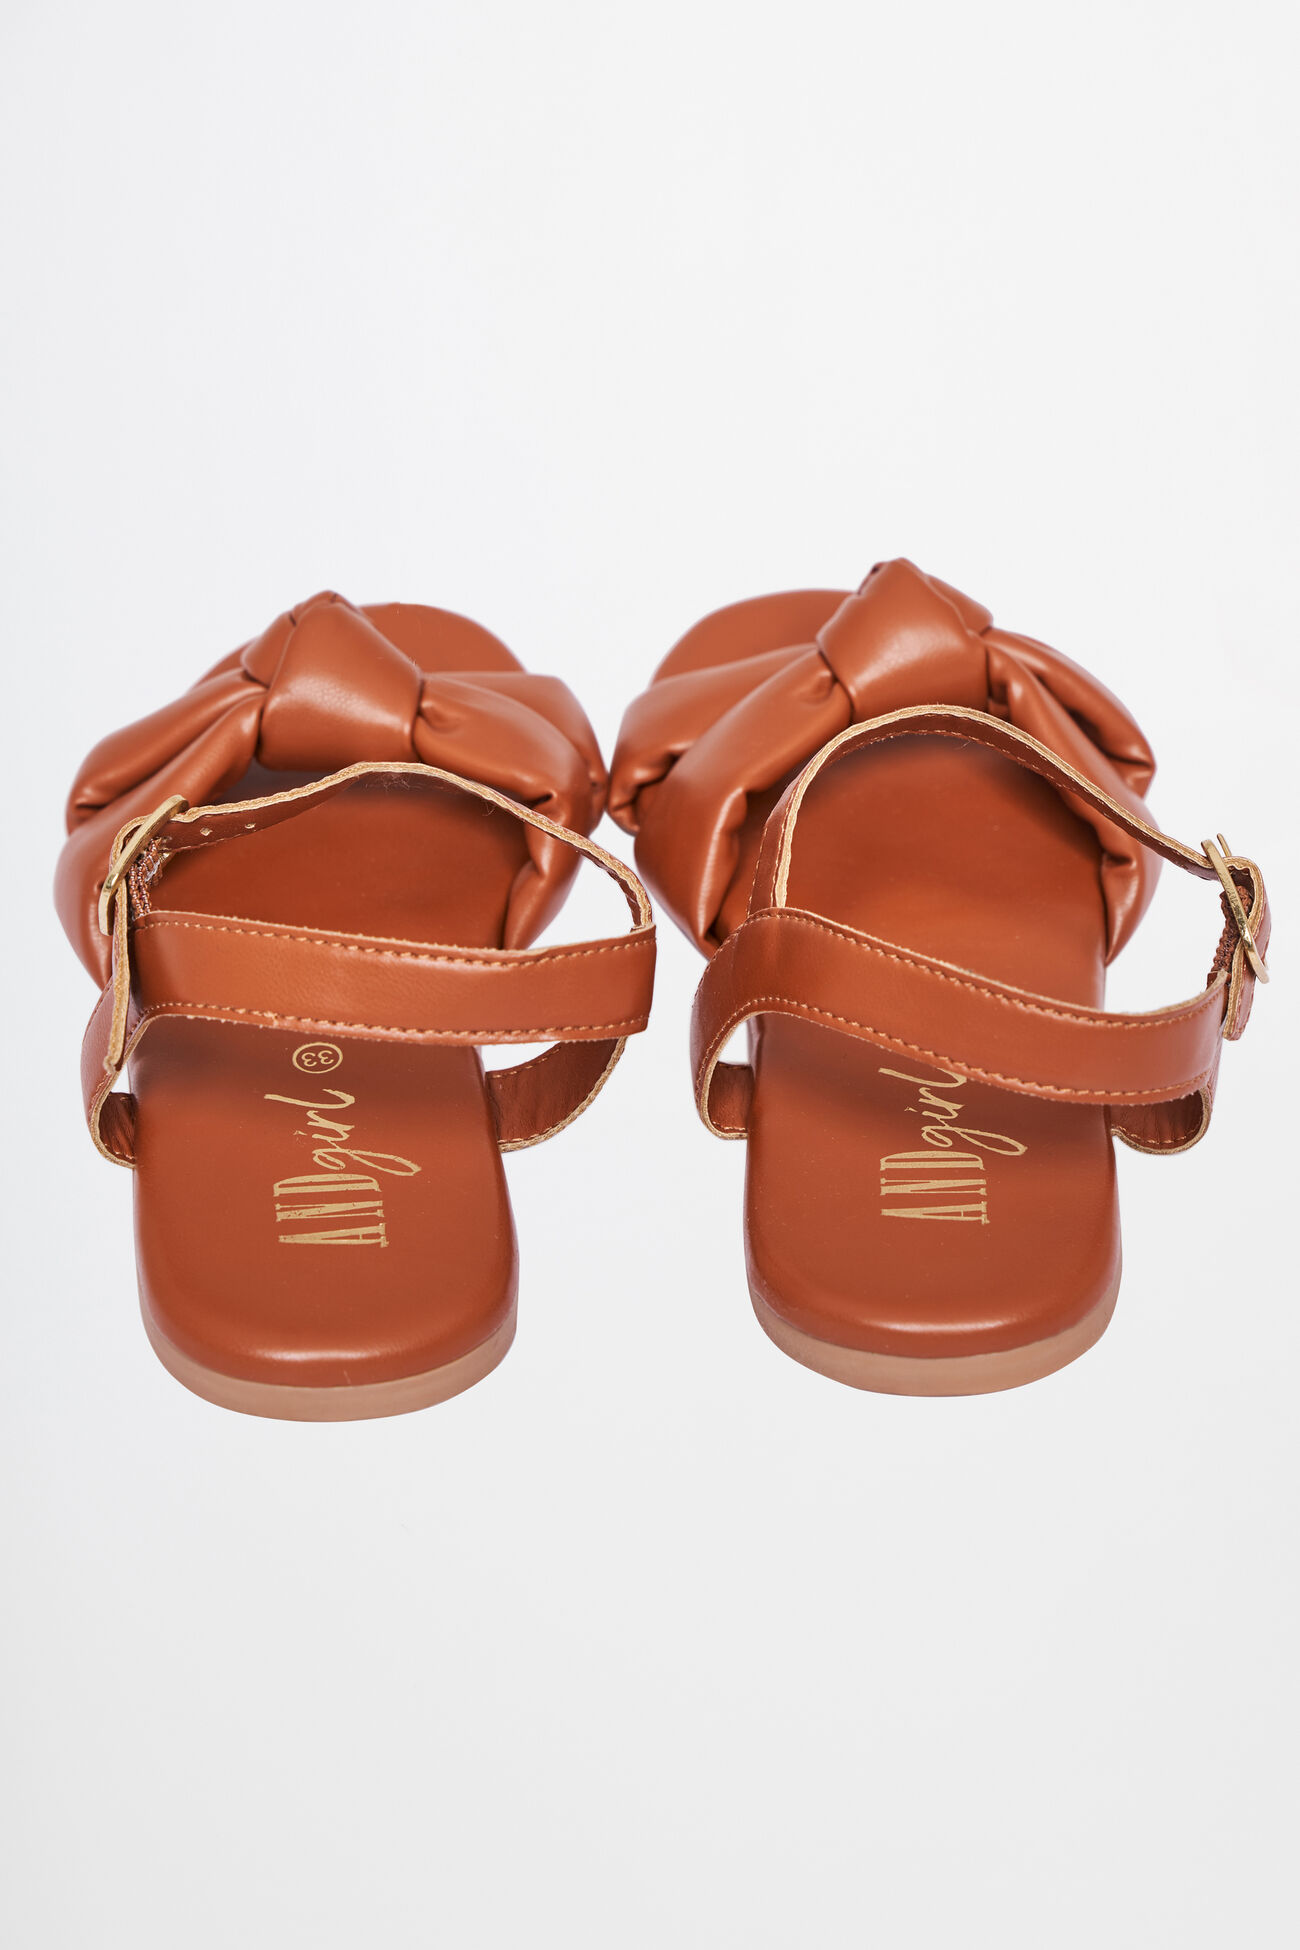 Contemporary Sandal, Tan, image 4